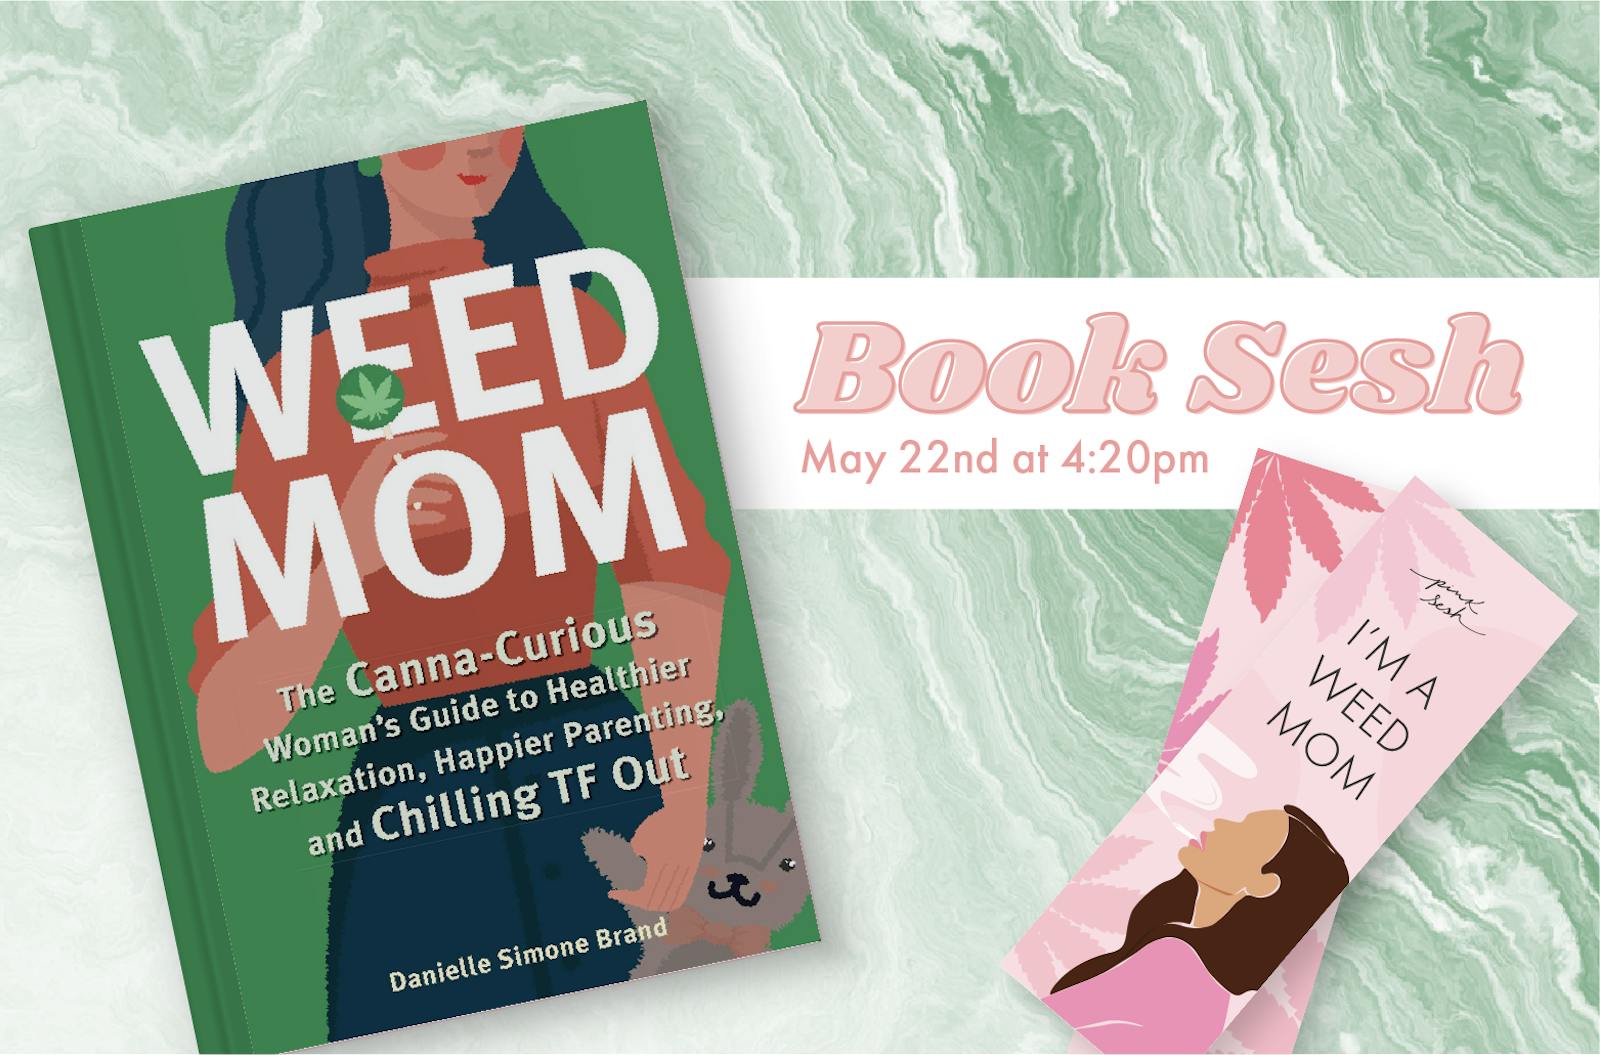 WEED MOM BOOK SESH 